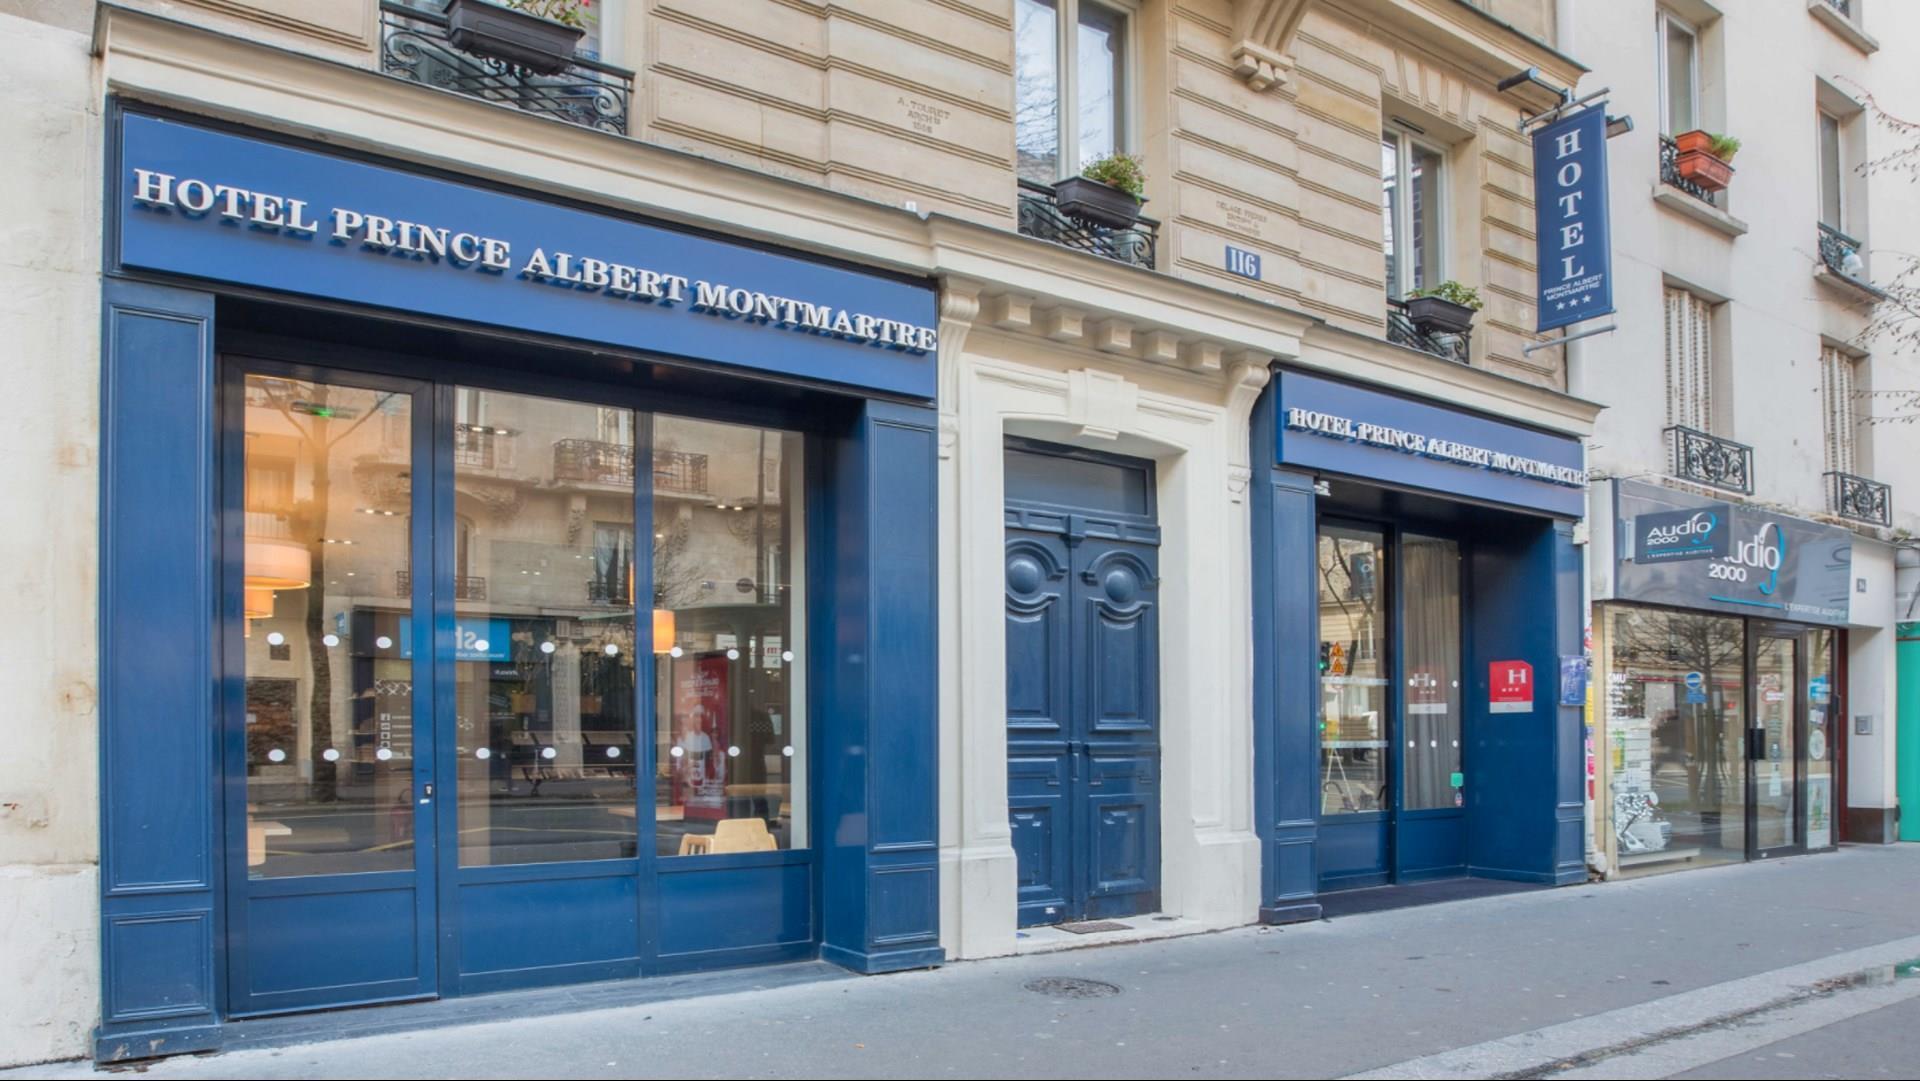 Hotel Prince Albert Montmartre in Paris, FR